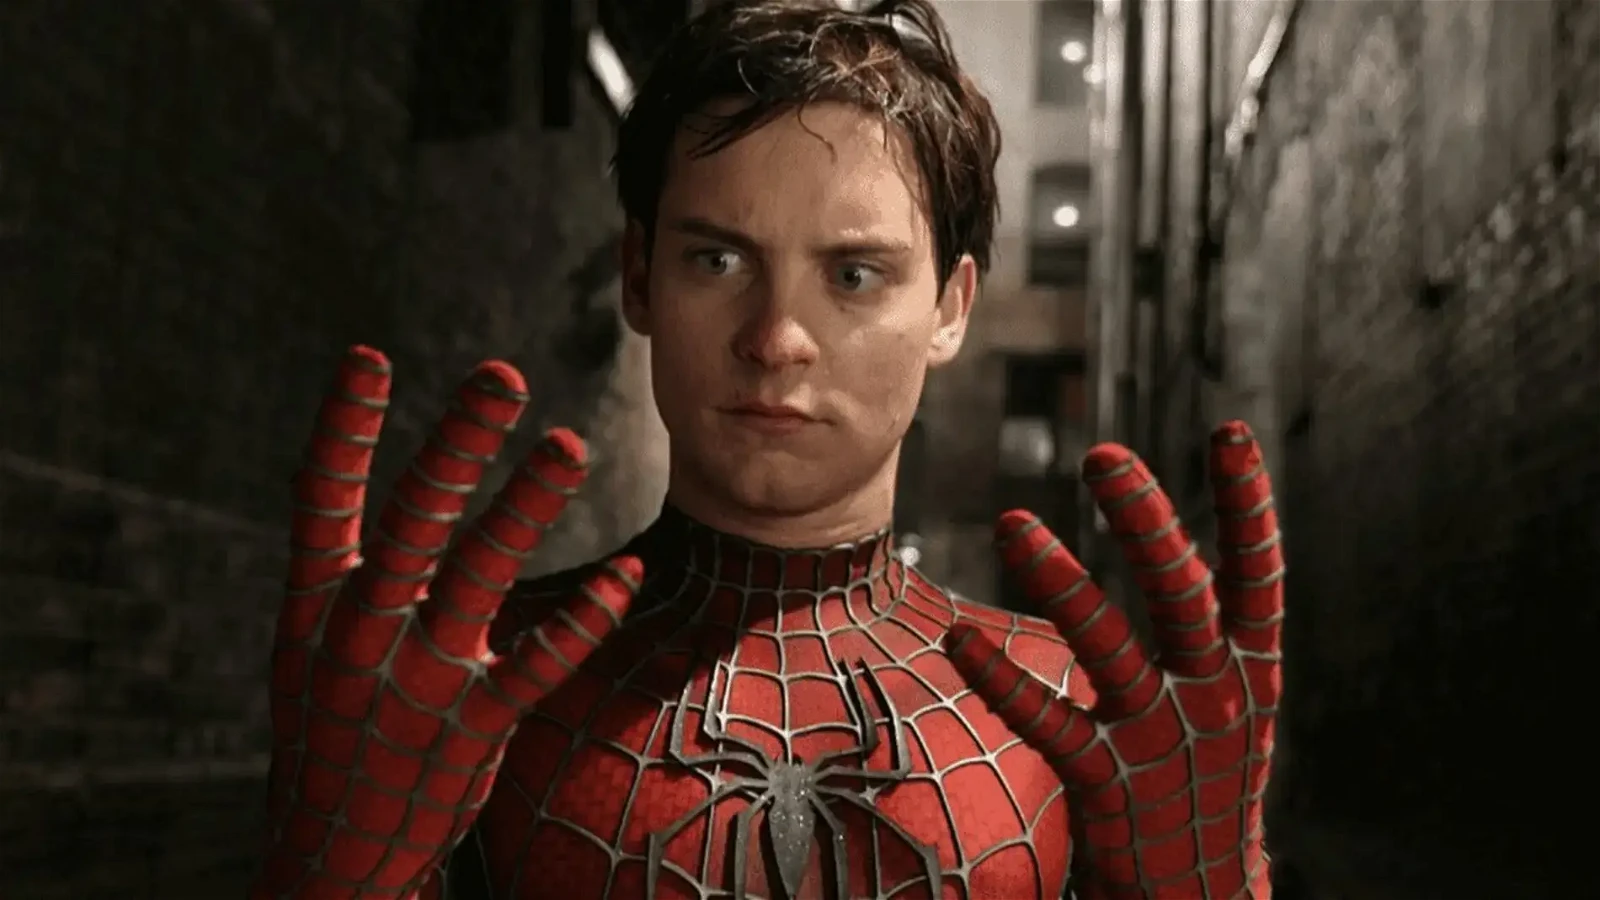 Tobey Maguire in Sam Raimi's Spider-Man trilogy